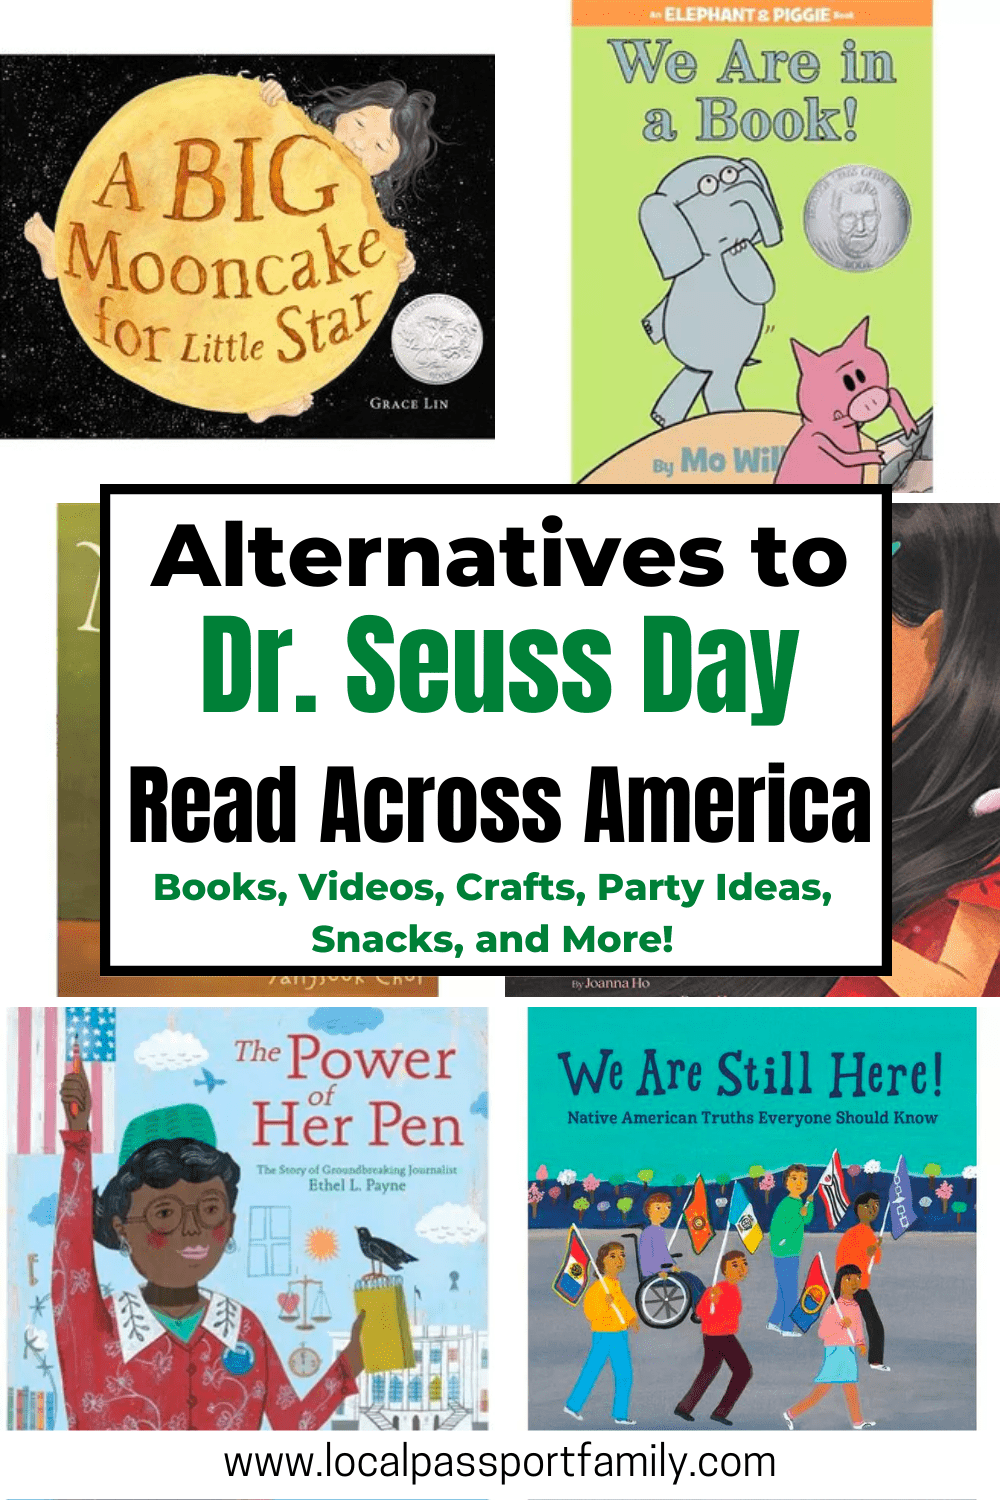 Read Across America Alternatives to Dr. Seuss Day Local Passport Family